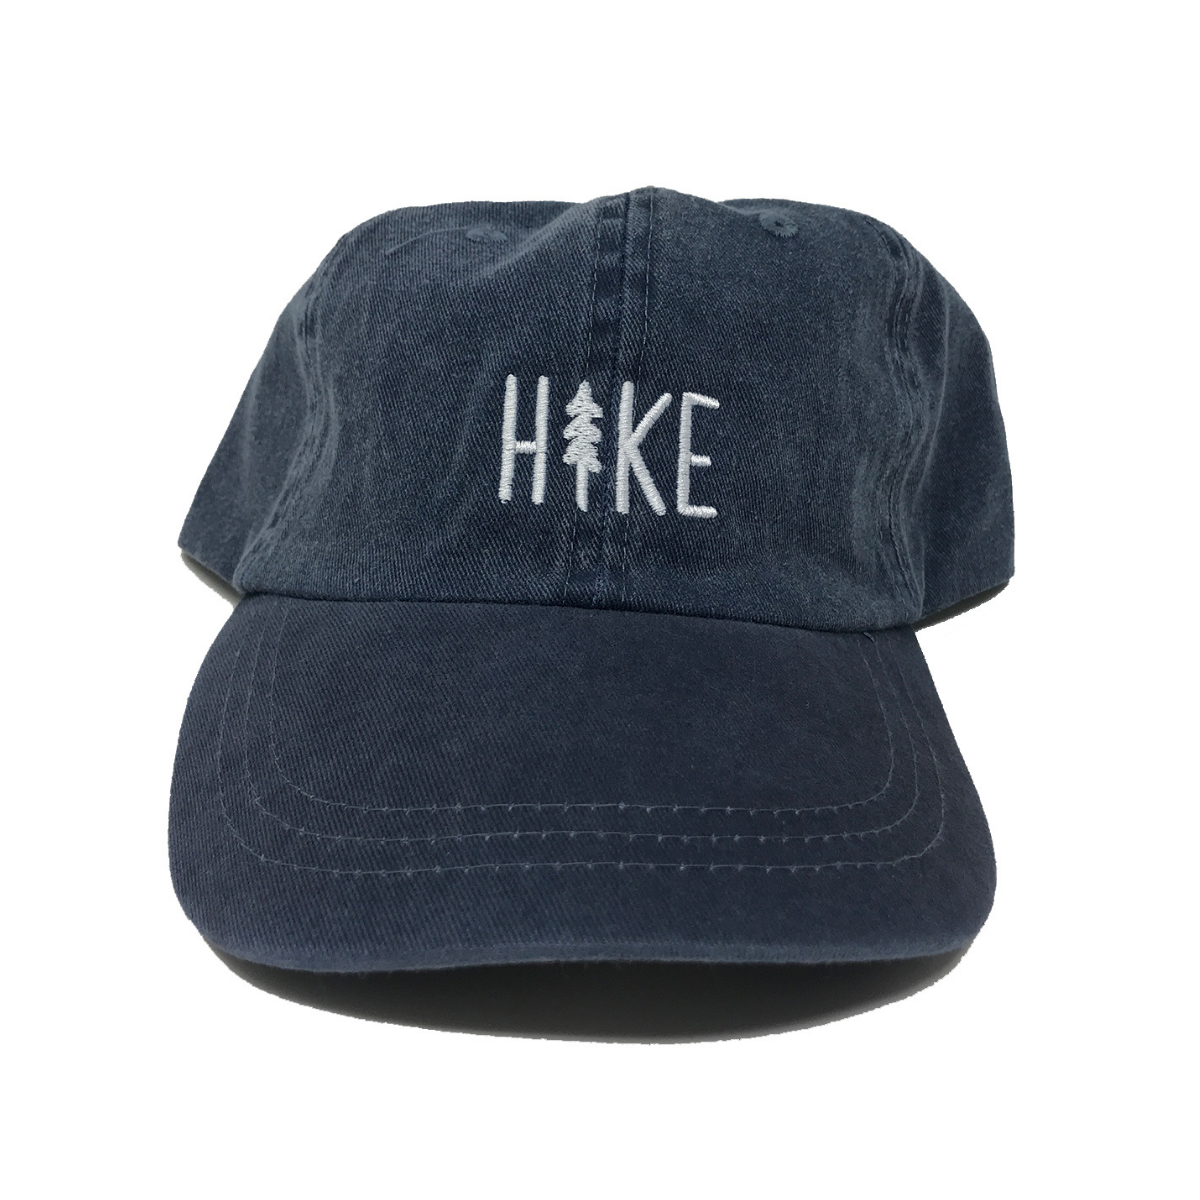 Hike Dad Hat